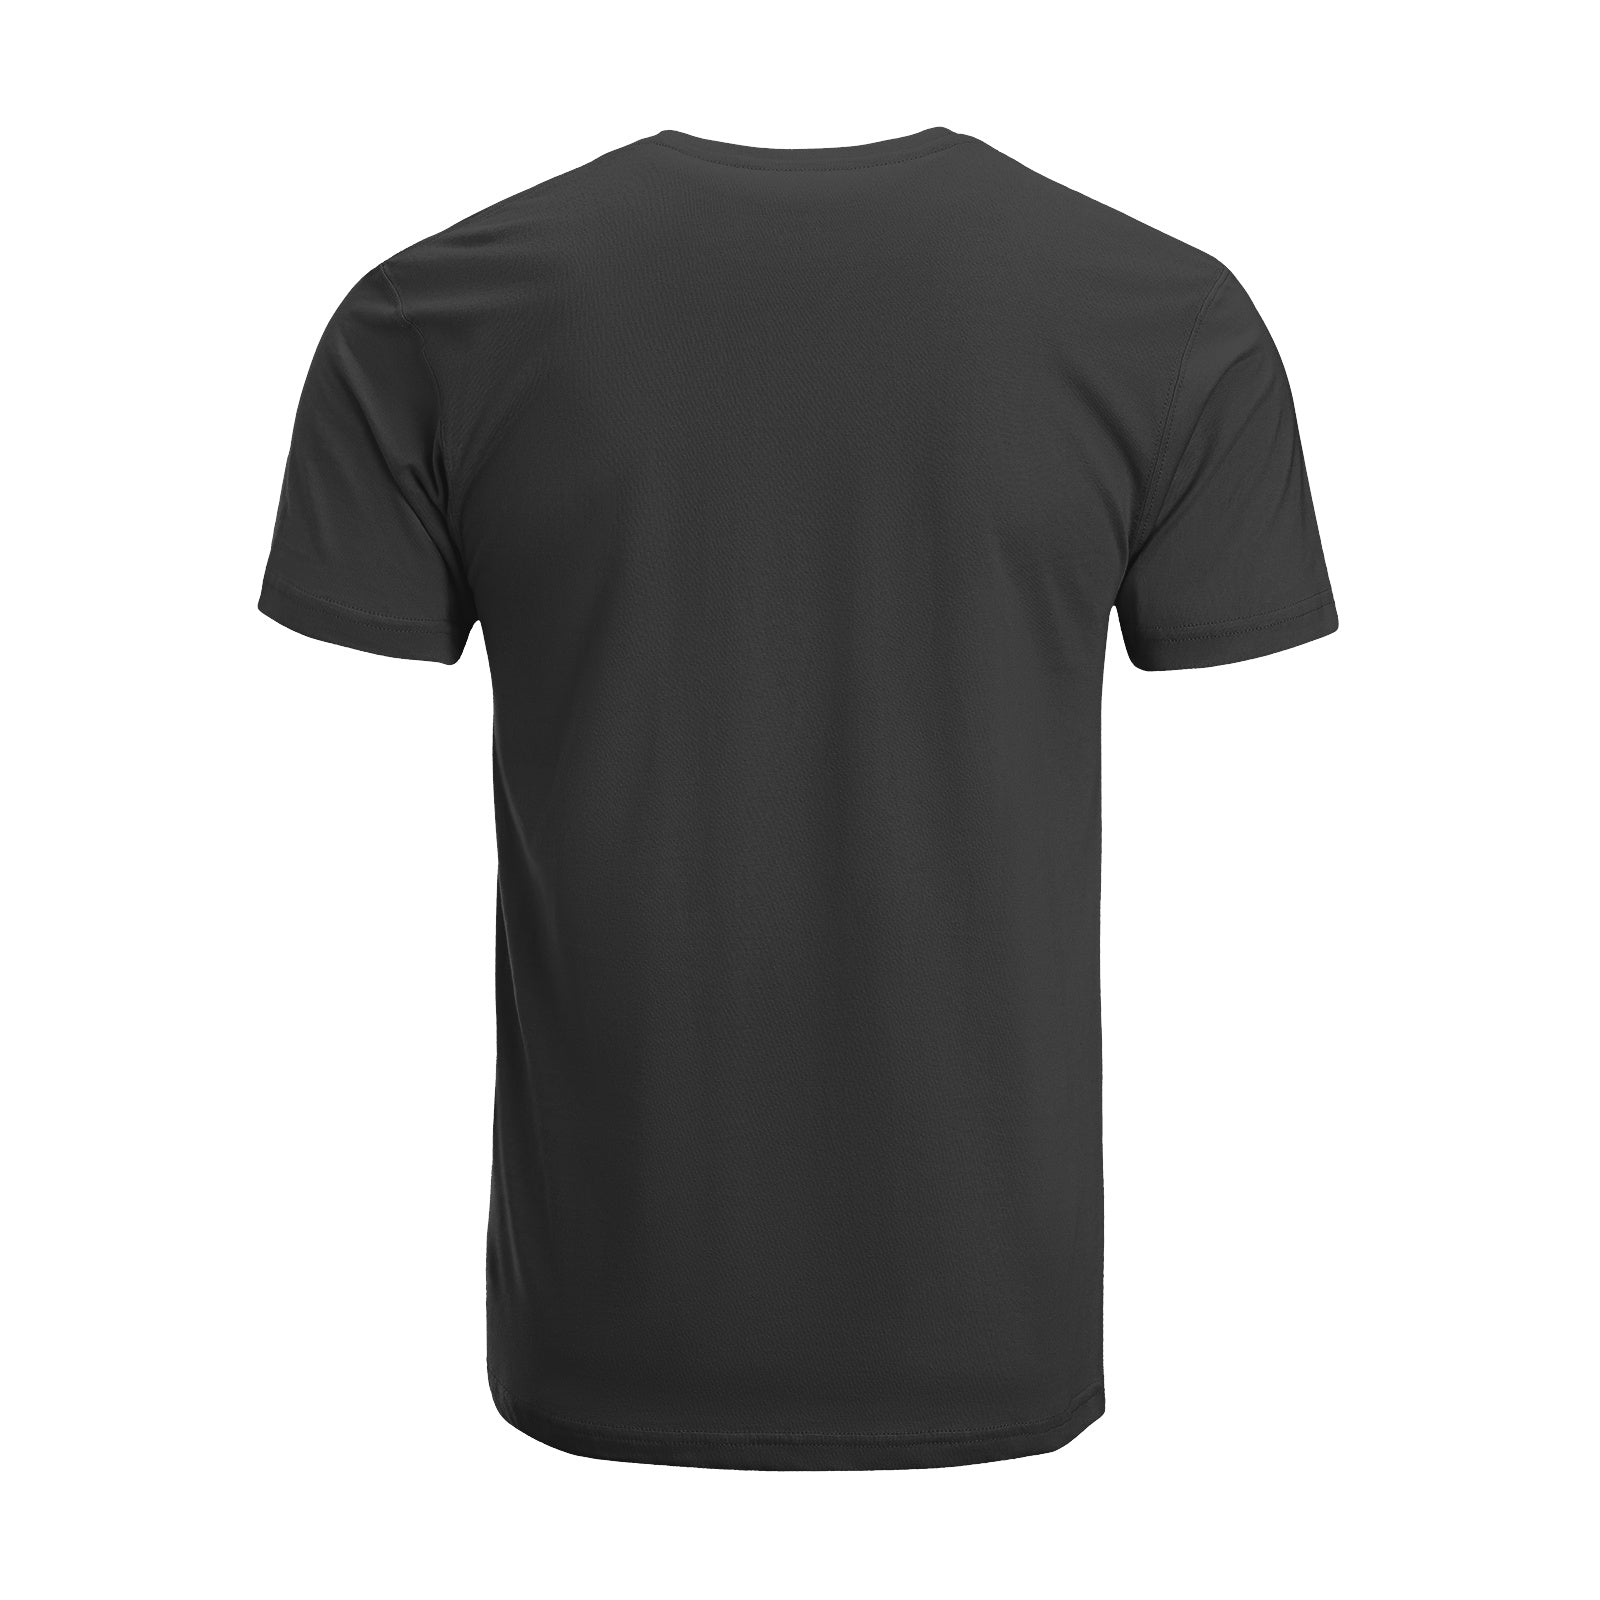 Unisex Short Sleeve Crew Neck Cotton Jersey T-Shirt Gym No. 22 - Tara-Outfits.com